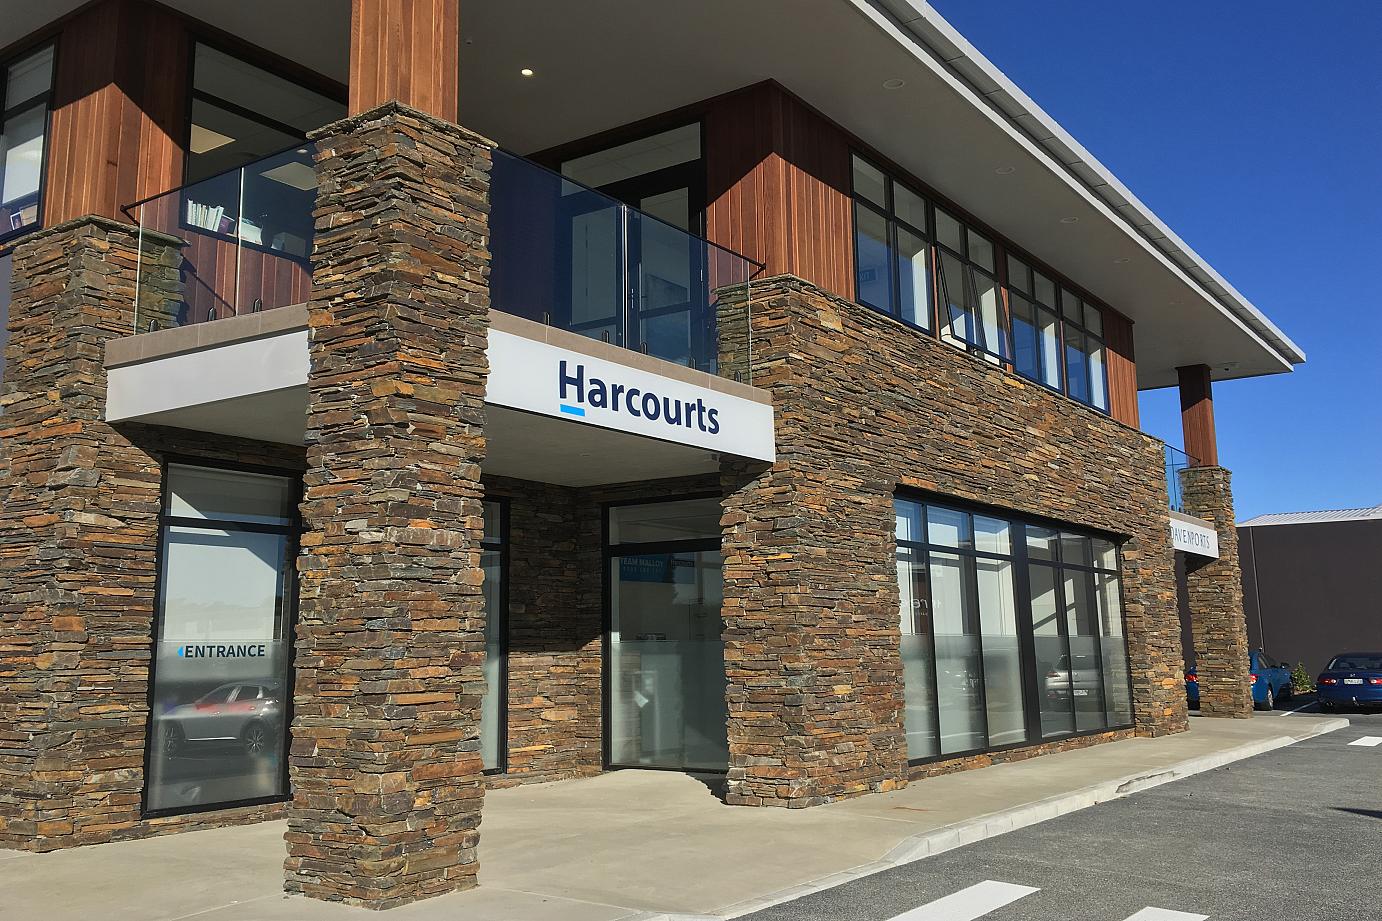 Harcourts Building clad in Sumner Otago Brown